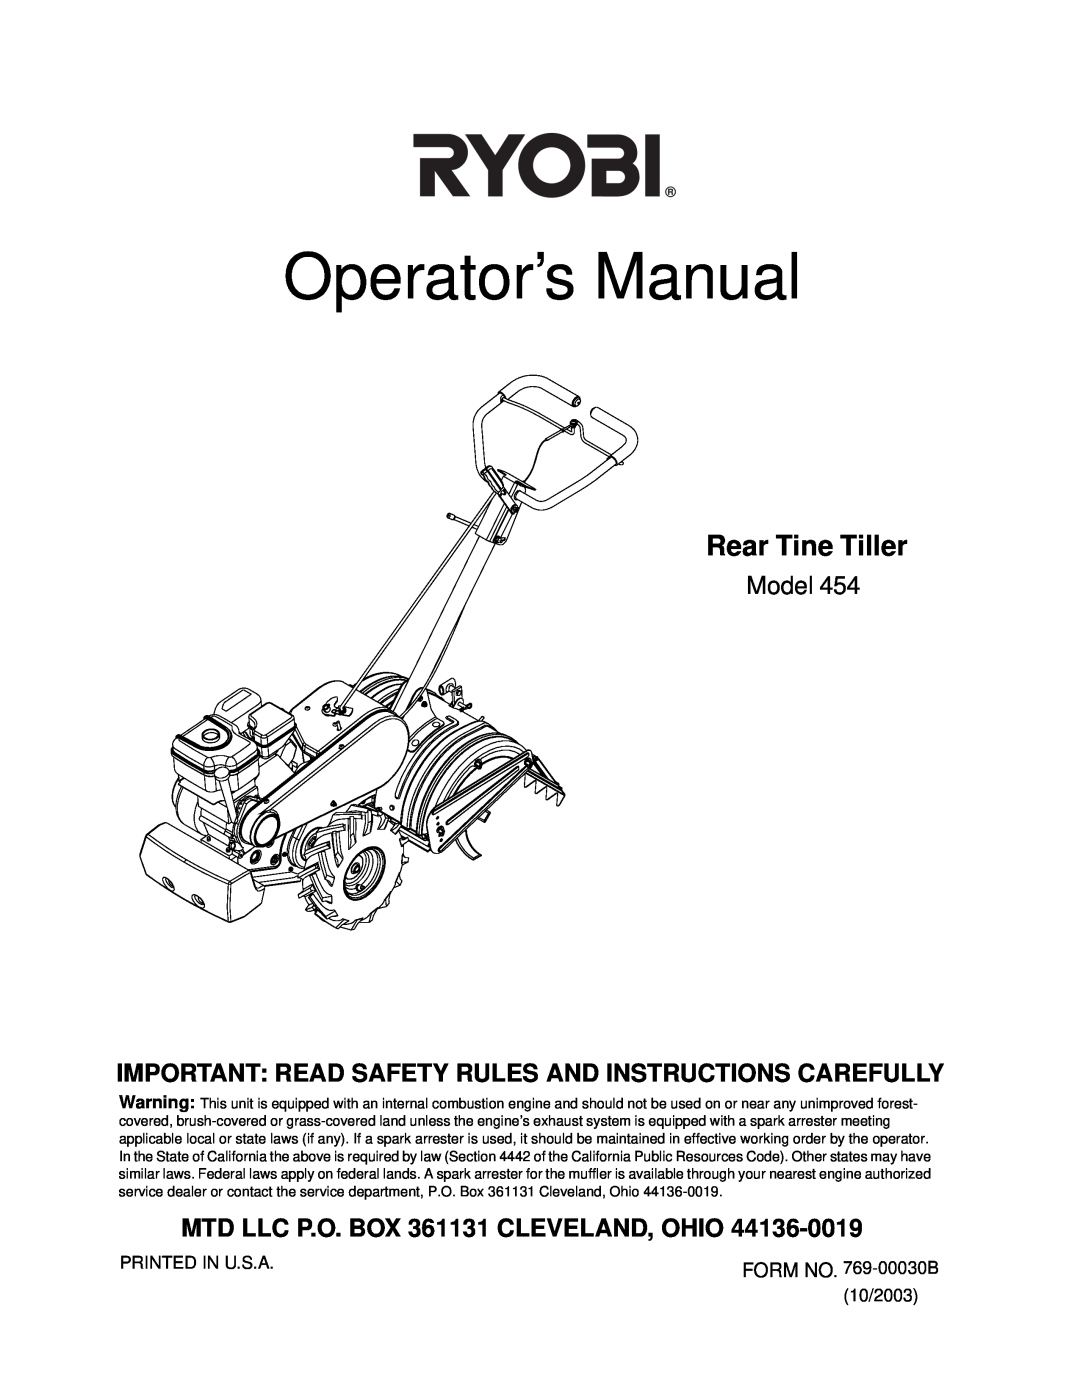 Ryobi 454 manual Operator’s Manual, Rear Tine Tiller, Model, MTD LLC P.O. BOX 361131 CLEVELAND, OHIO 